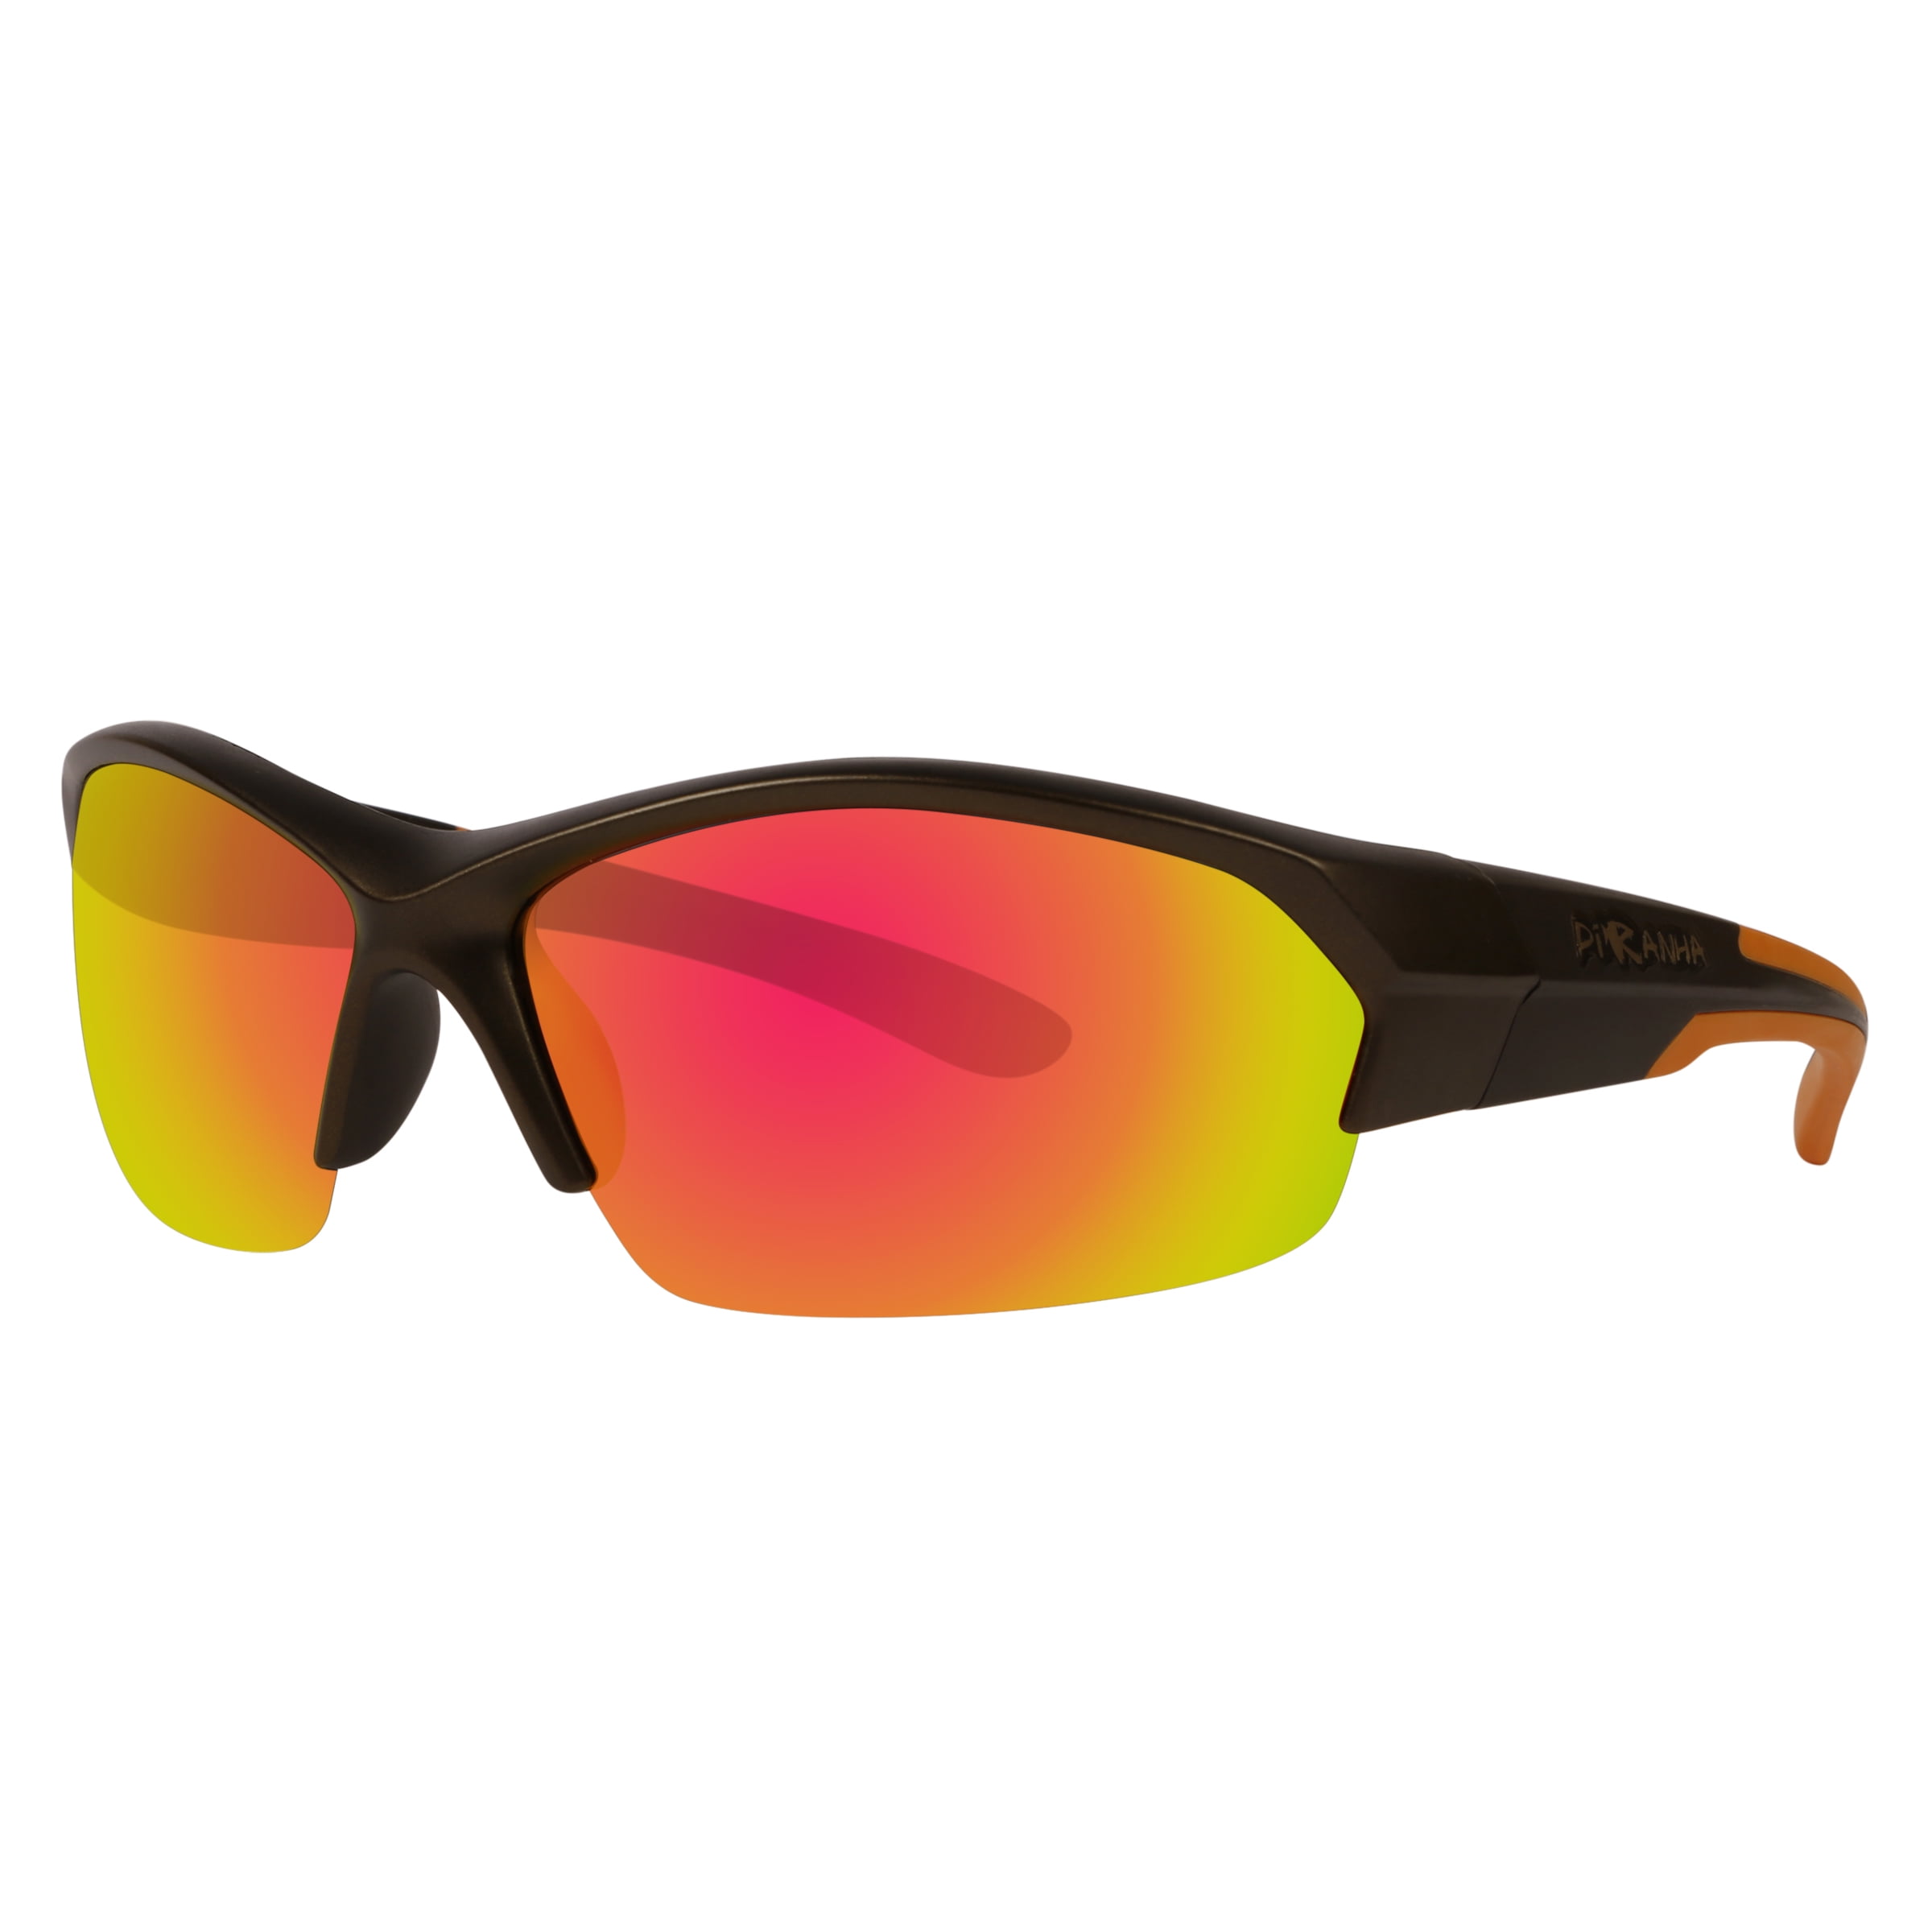 Equinox White Sports Sunglasses Red Mirror Cat-3 UV400 Shatterproof Lenses 